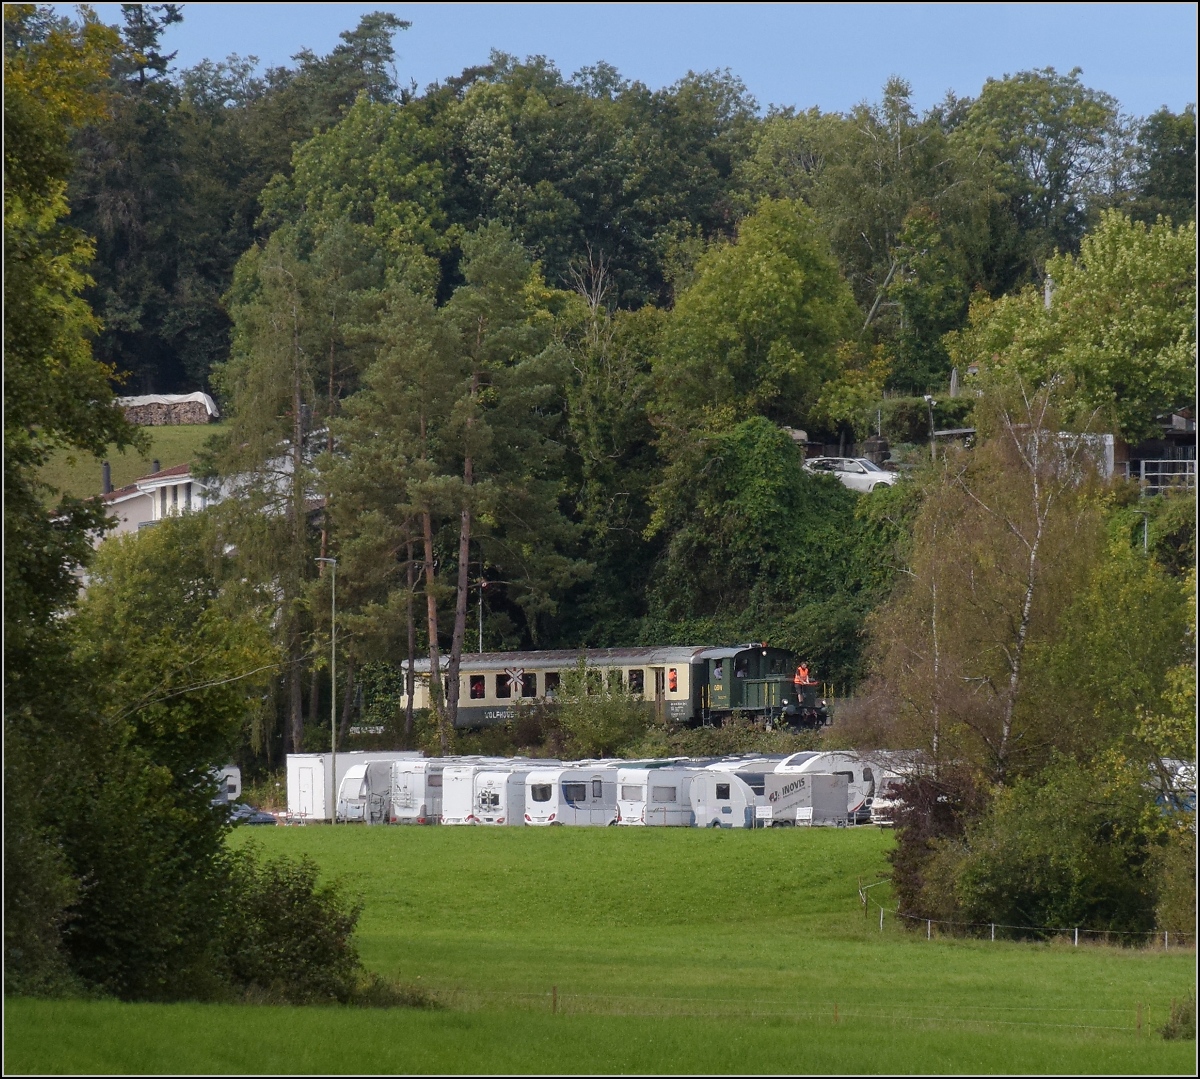 Fahrtag Wolfhuuser Bahn.

Am Ortseingang Wolfhausen. Oktober 2021.